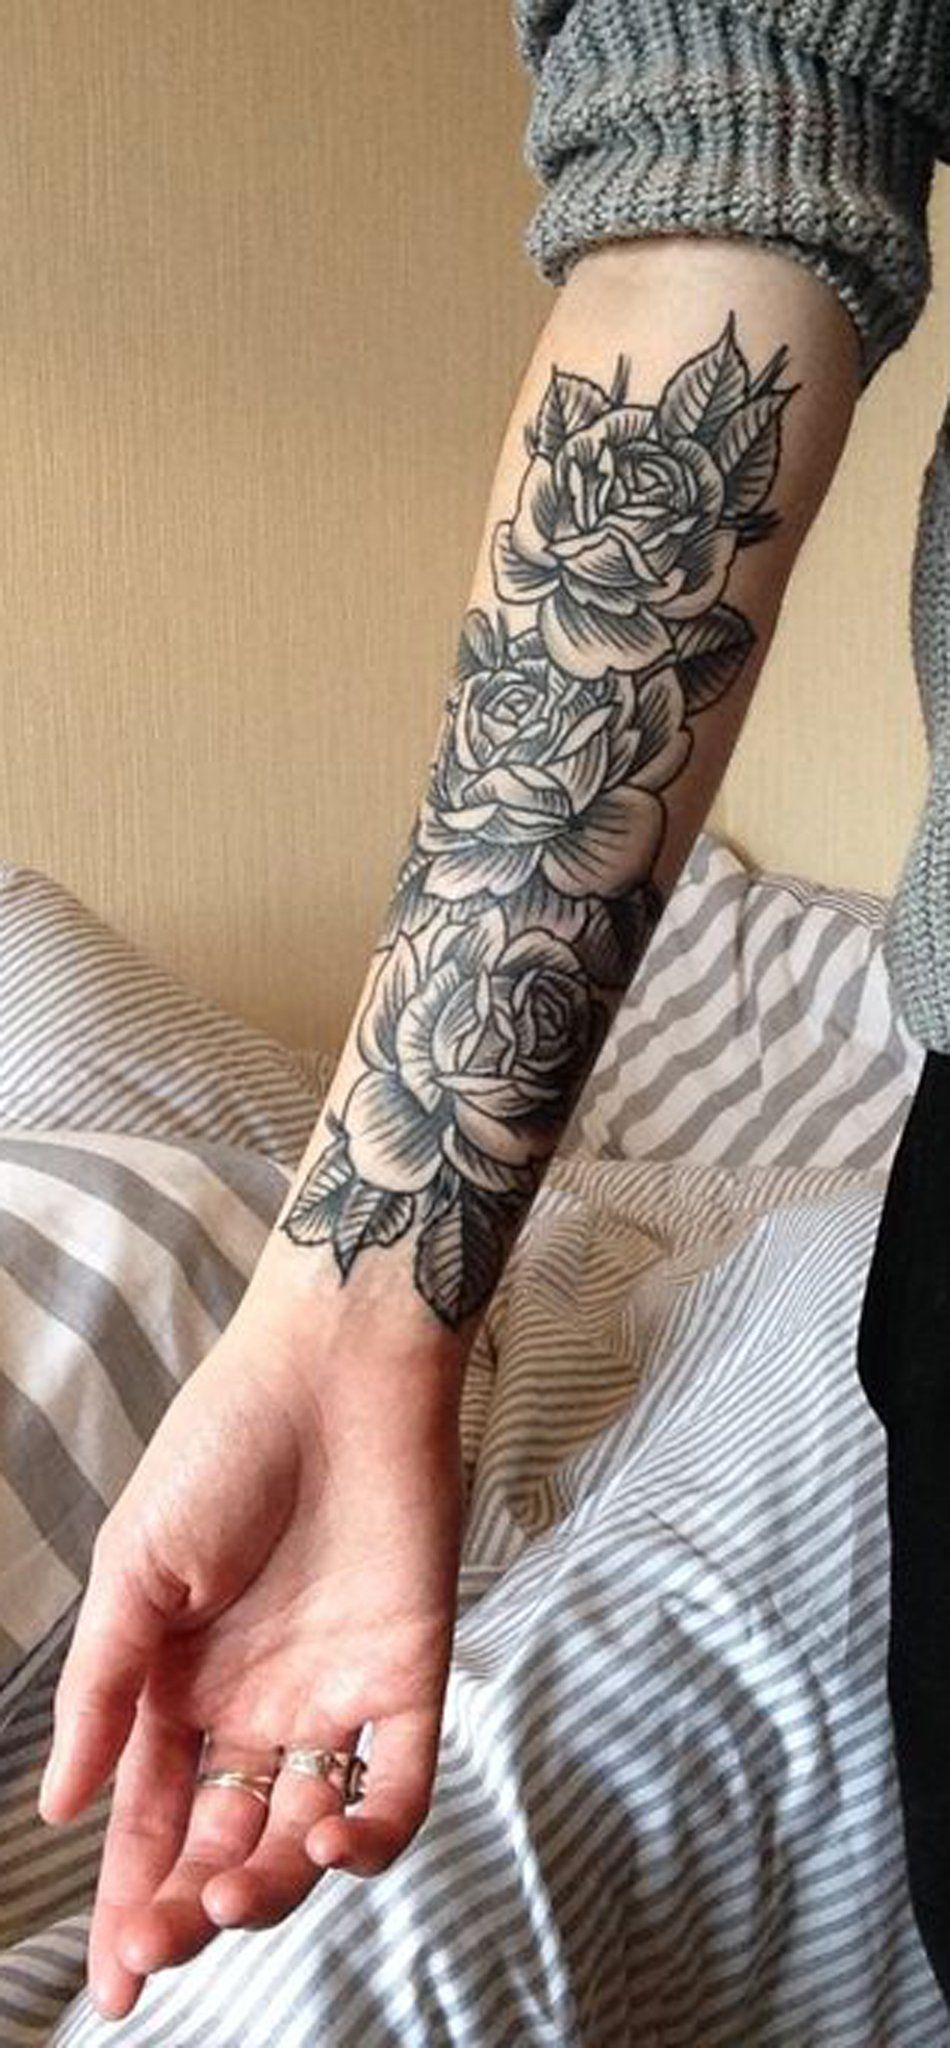 Ladies arm tattoos 30+ Trending